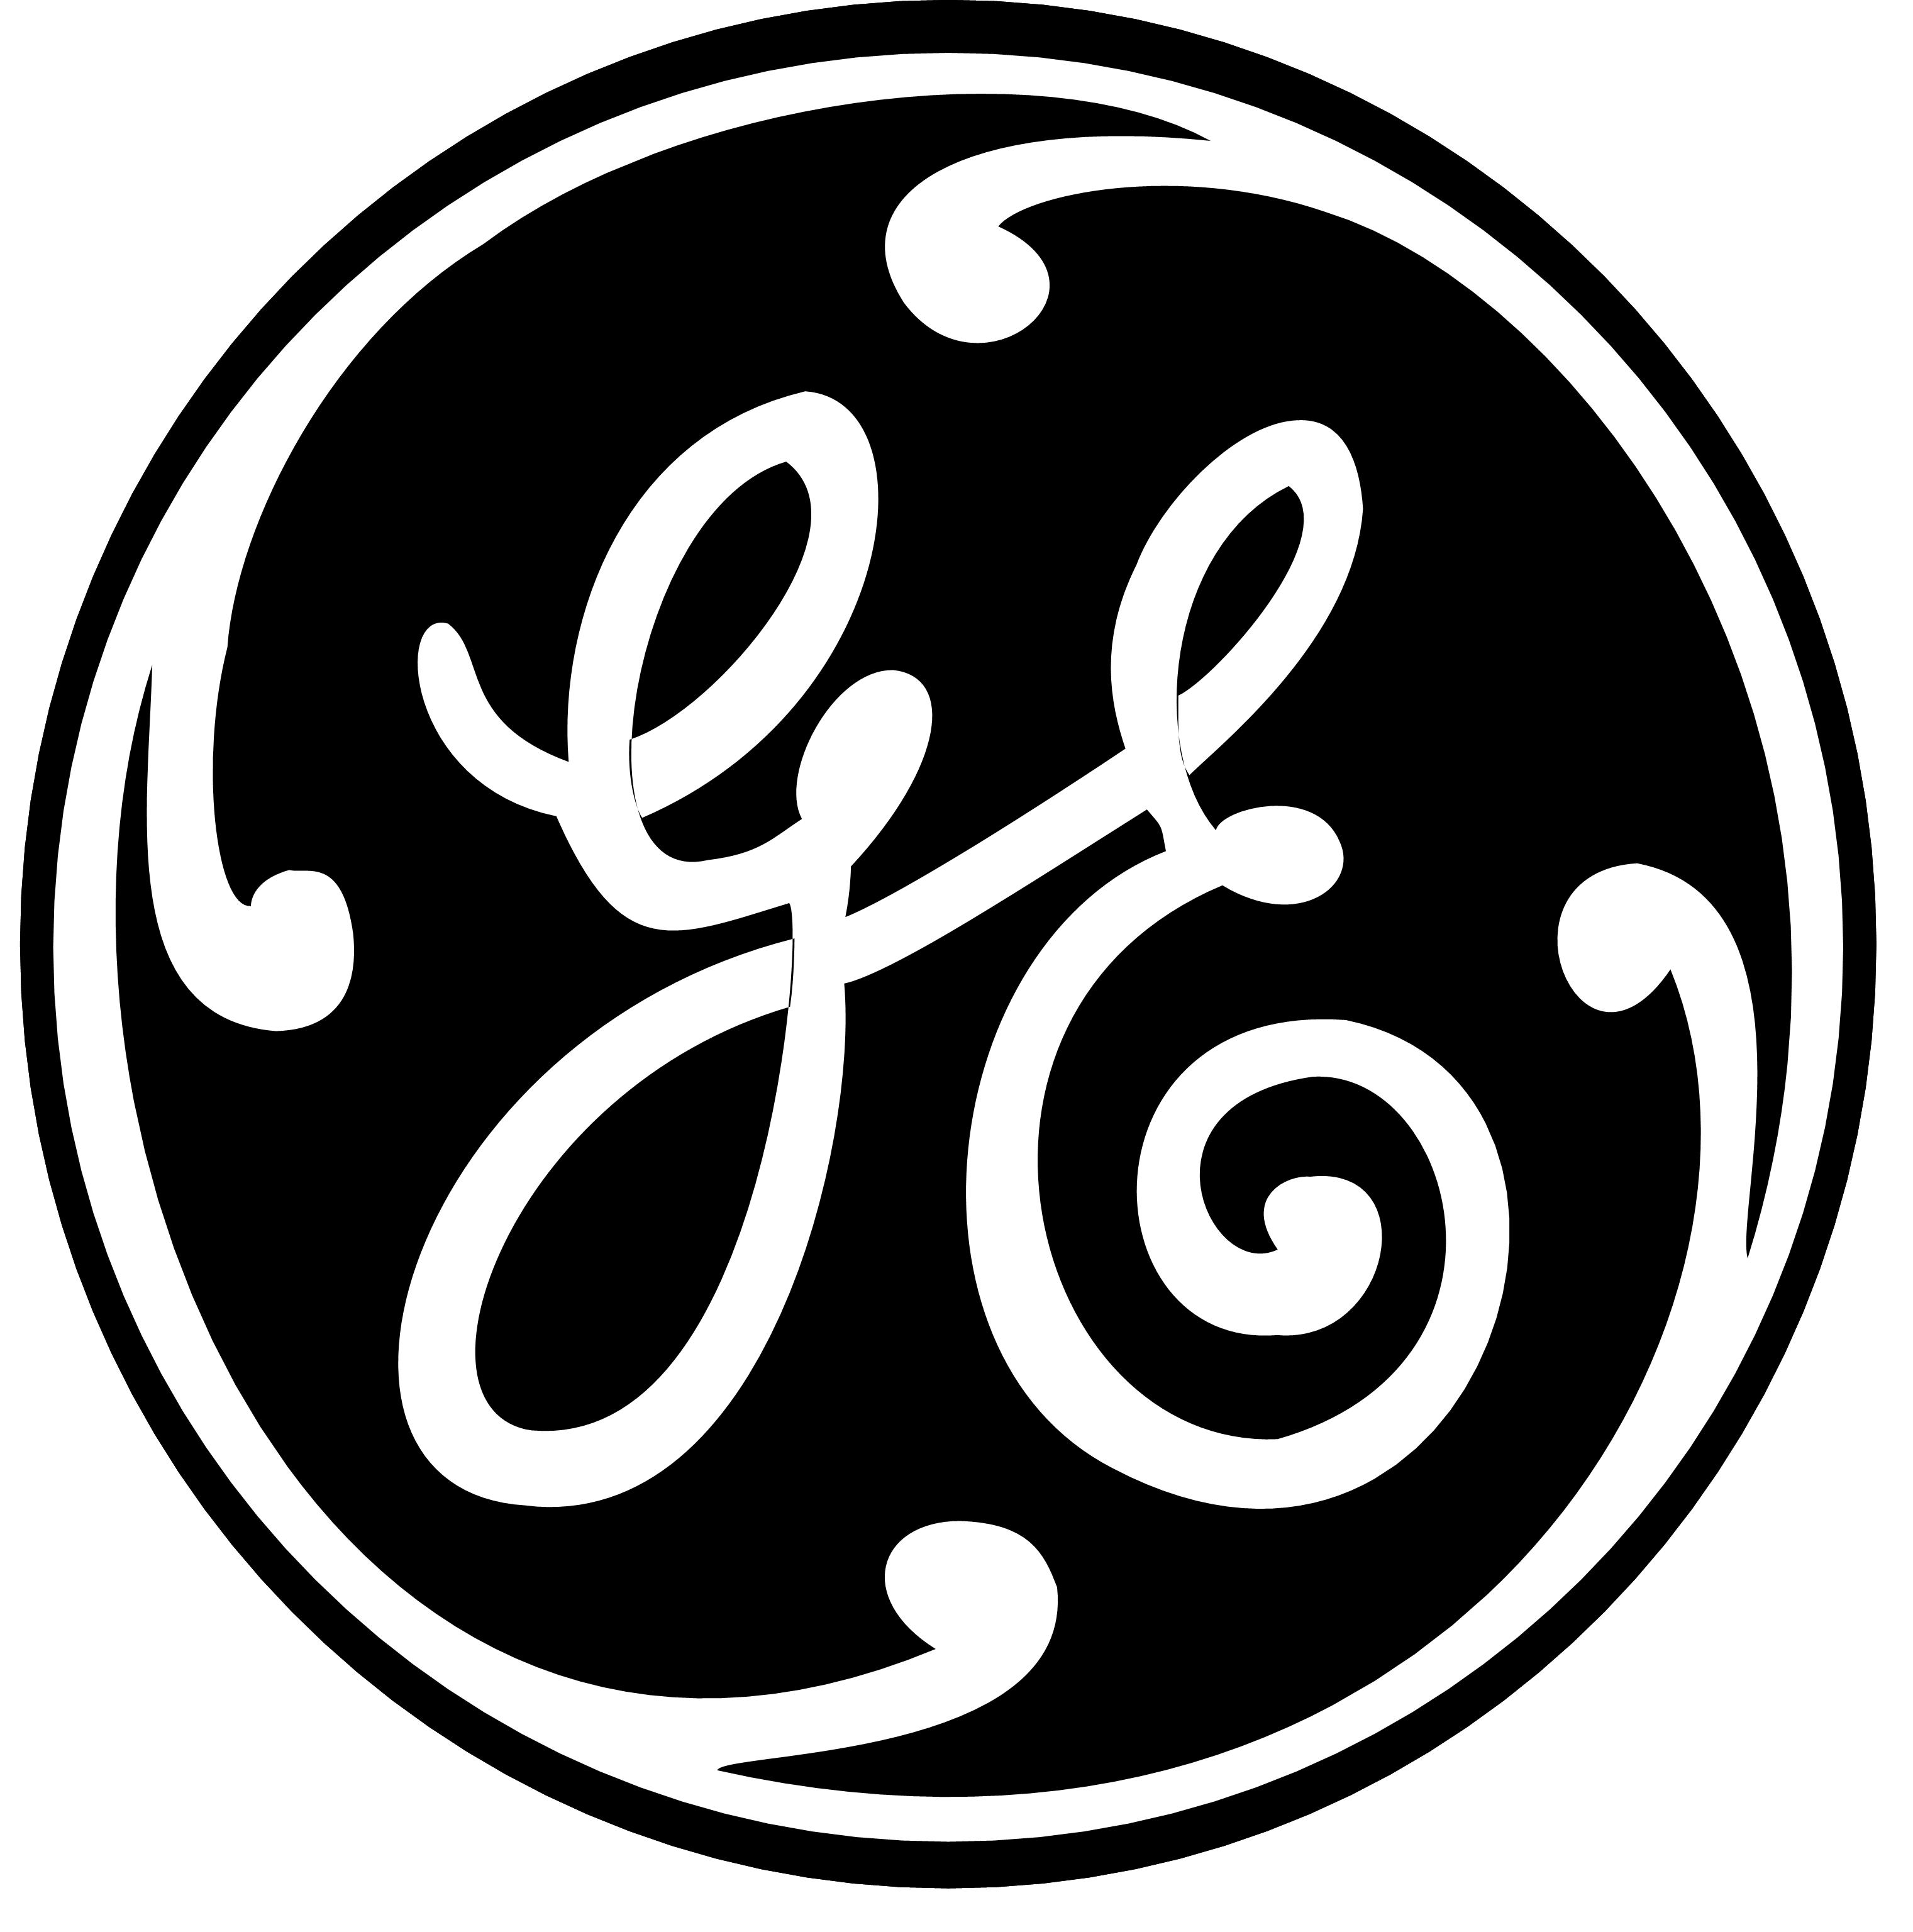 General Electric SWOT